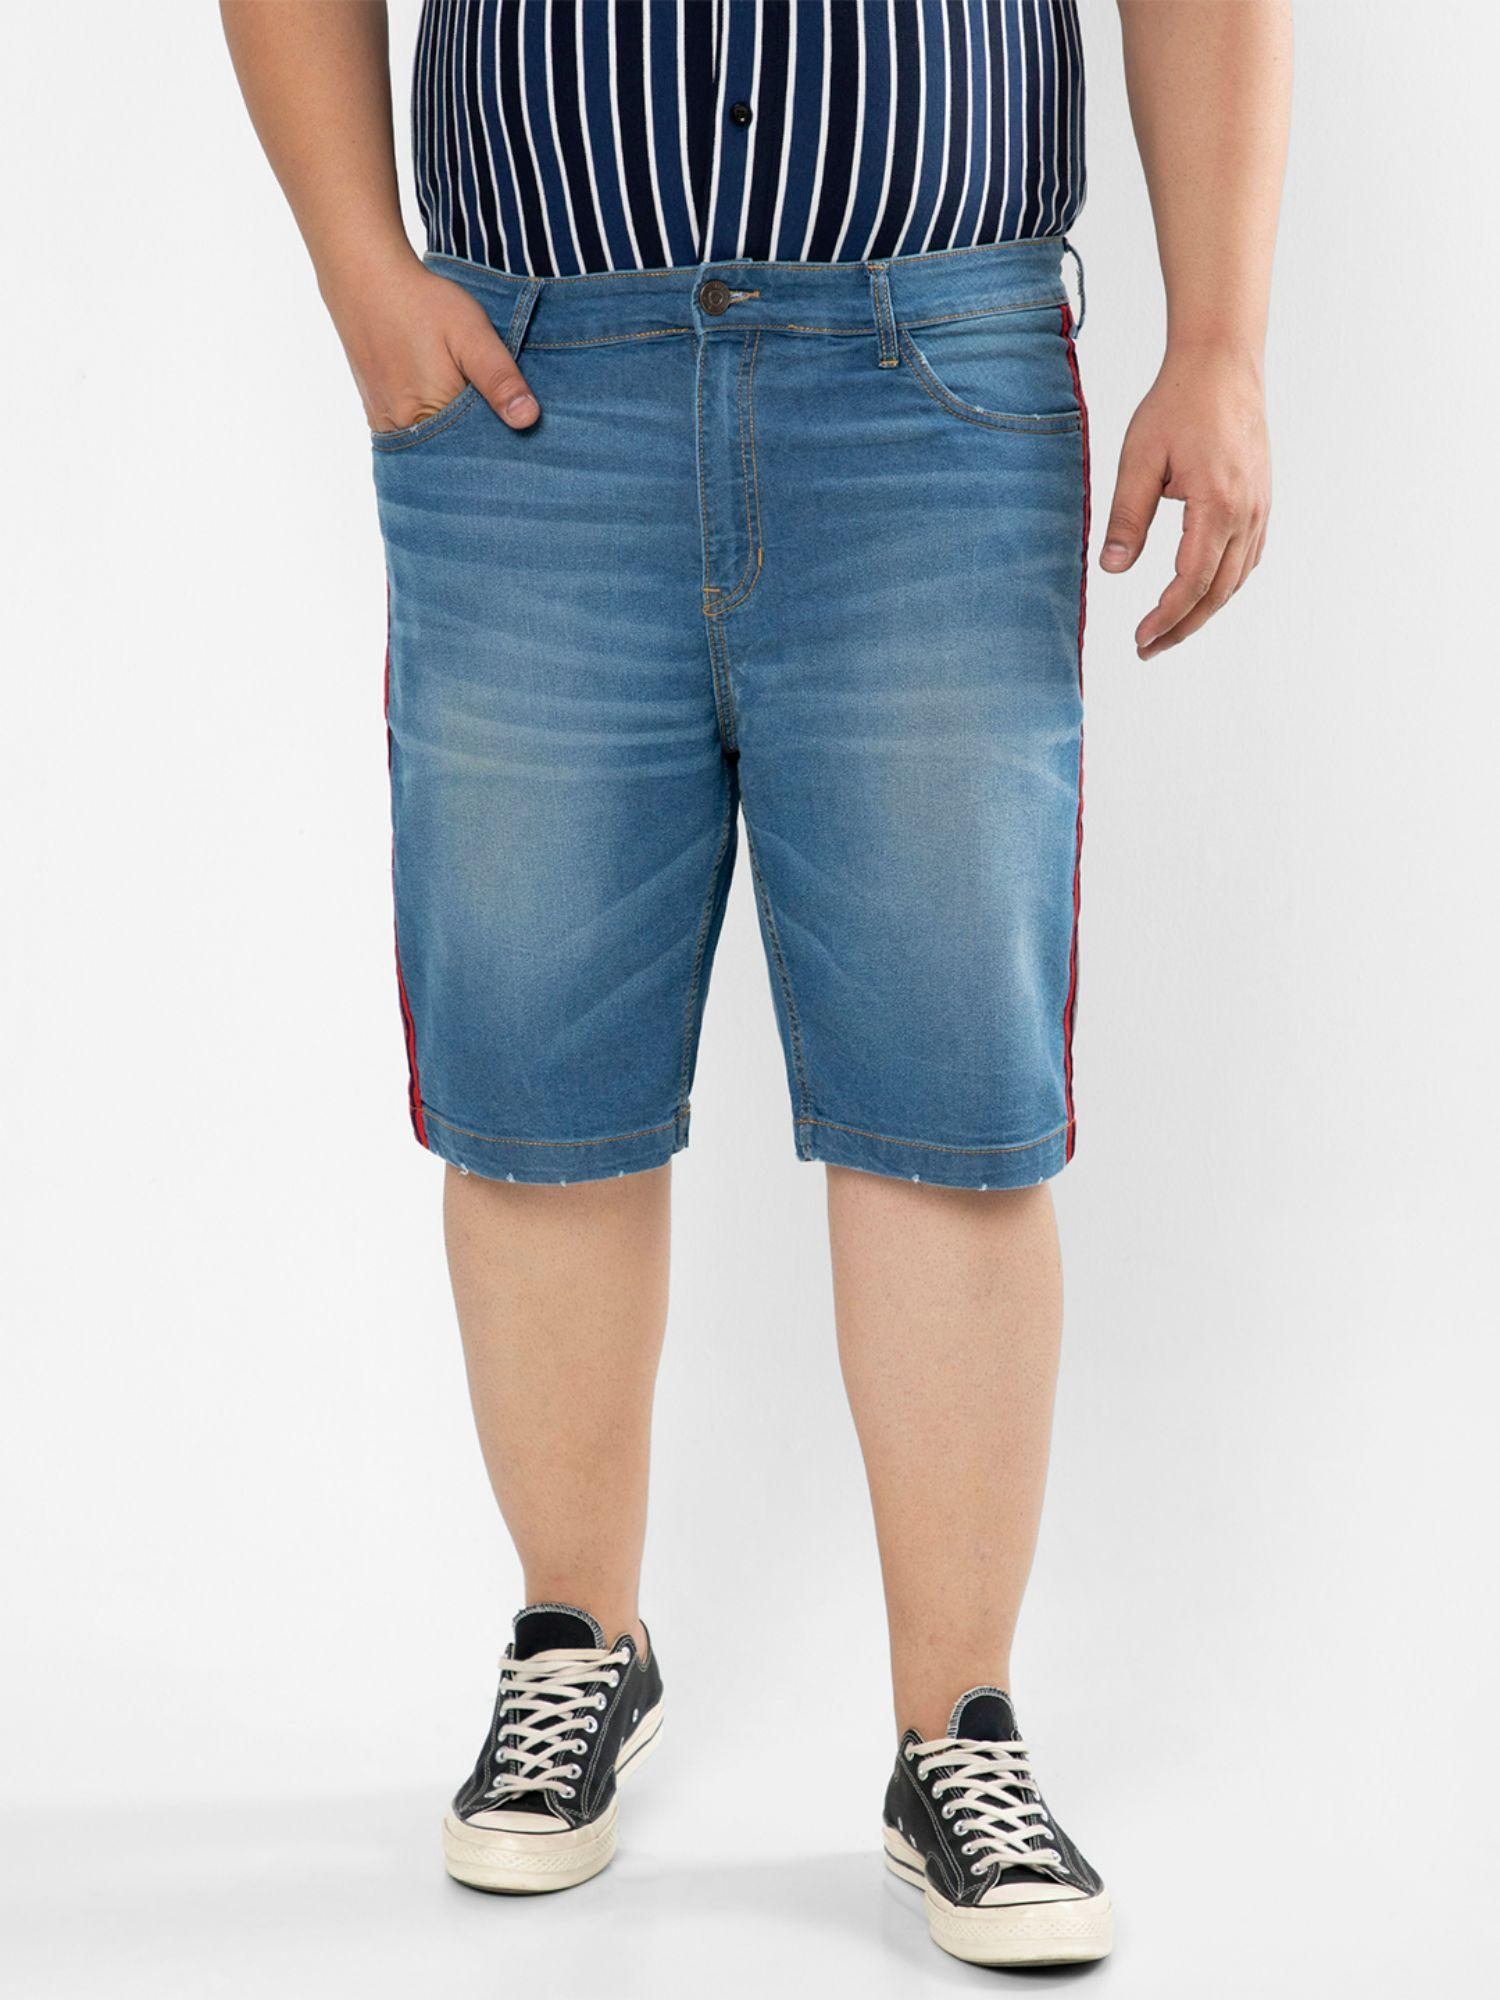 size men's solid & side striped stylish denim shorts,blue